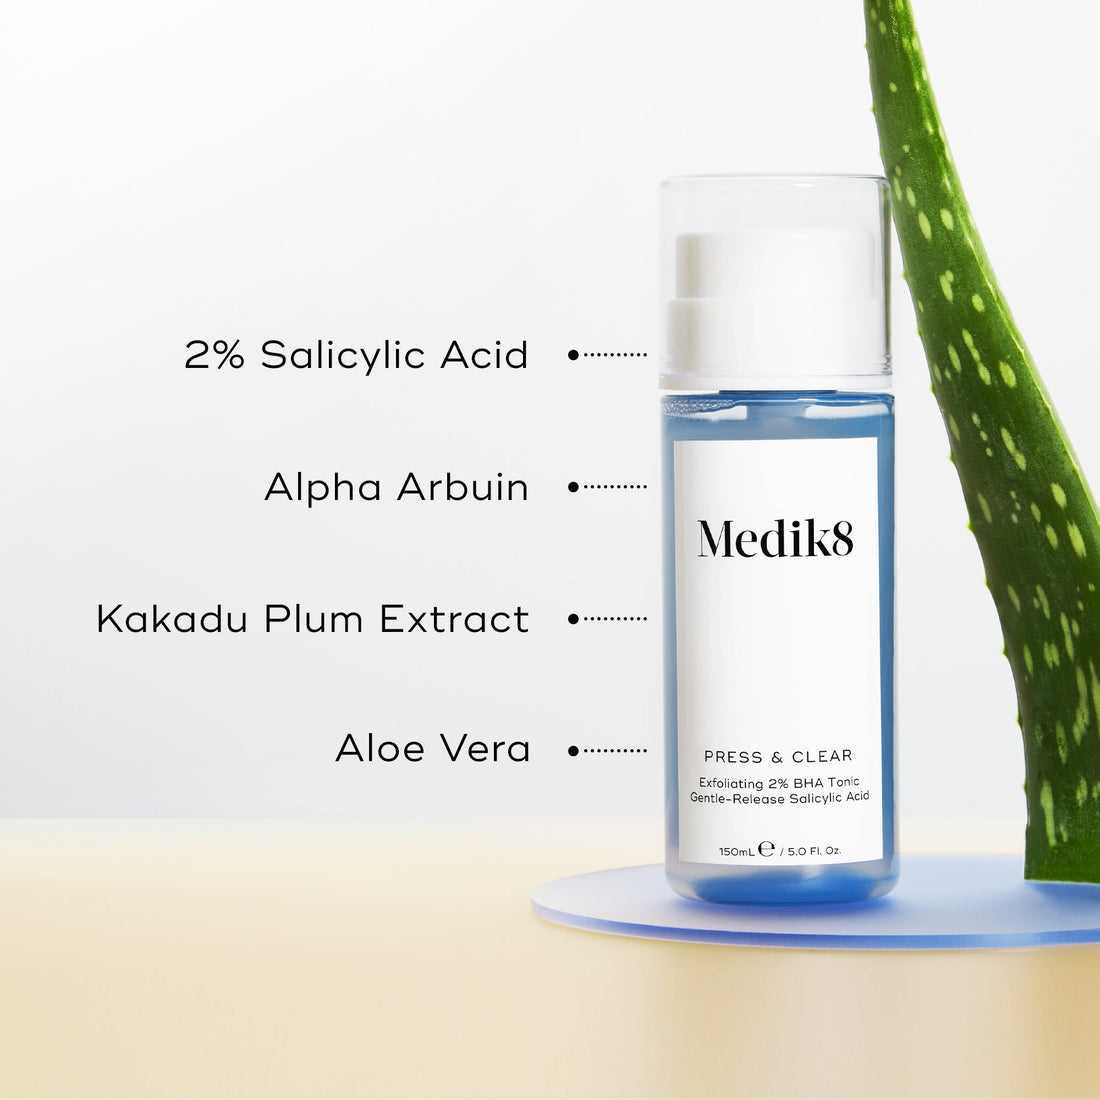 Medik8 Exfoliating 2% BHA Tonic
Gentle-Release Salicylic Acid 150ml